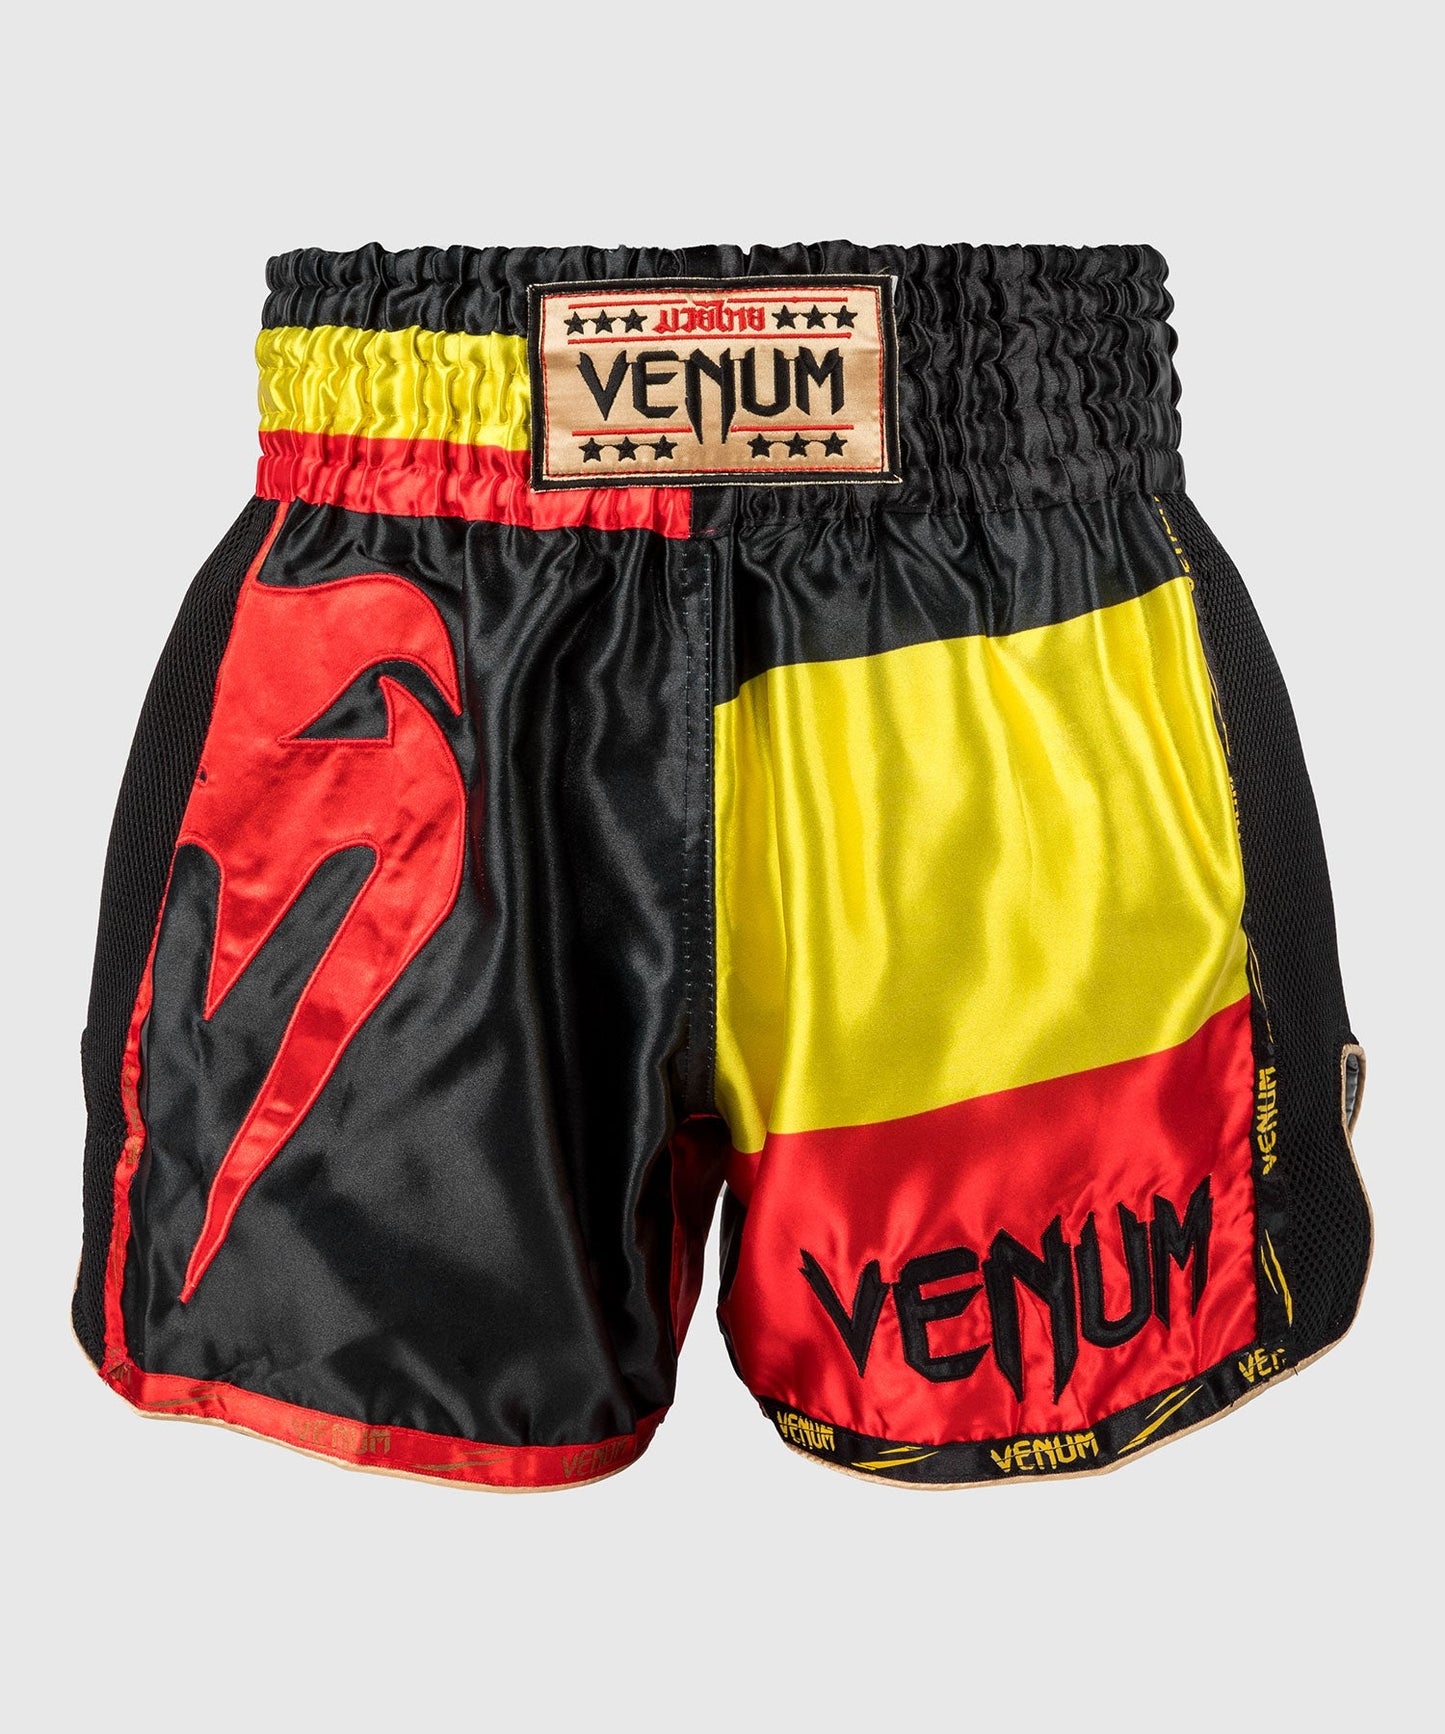 Venum Giant Muay Thai Shorts - Schwarz/Gelb/Rot